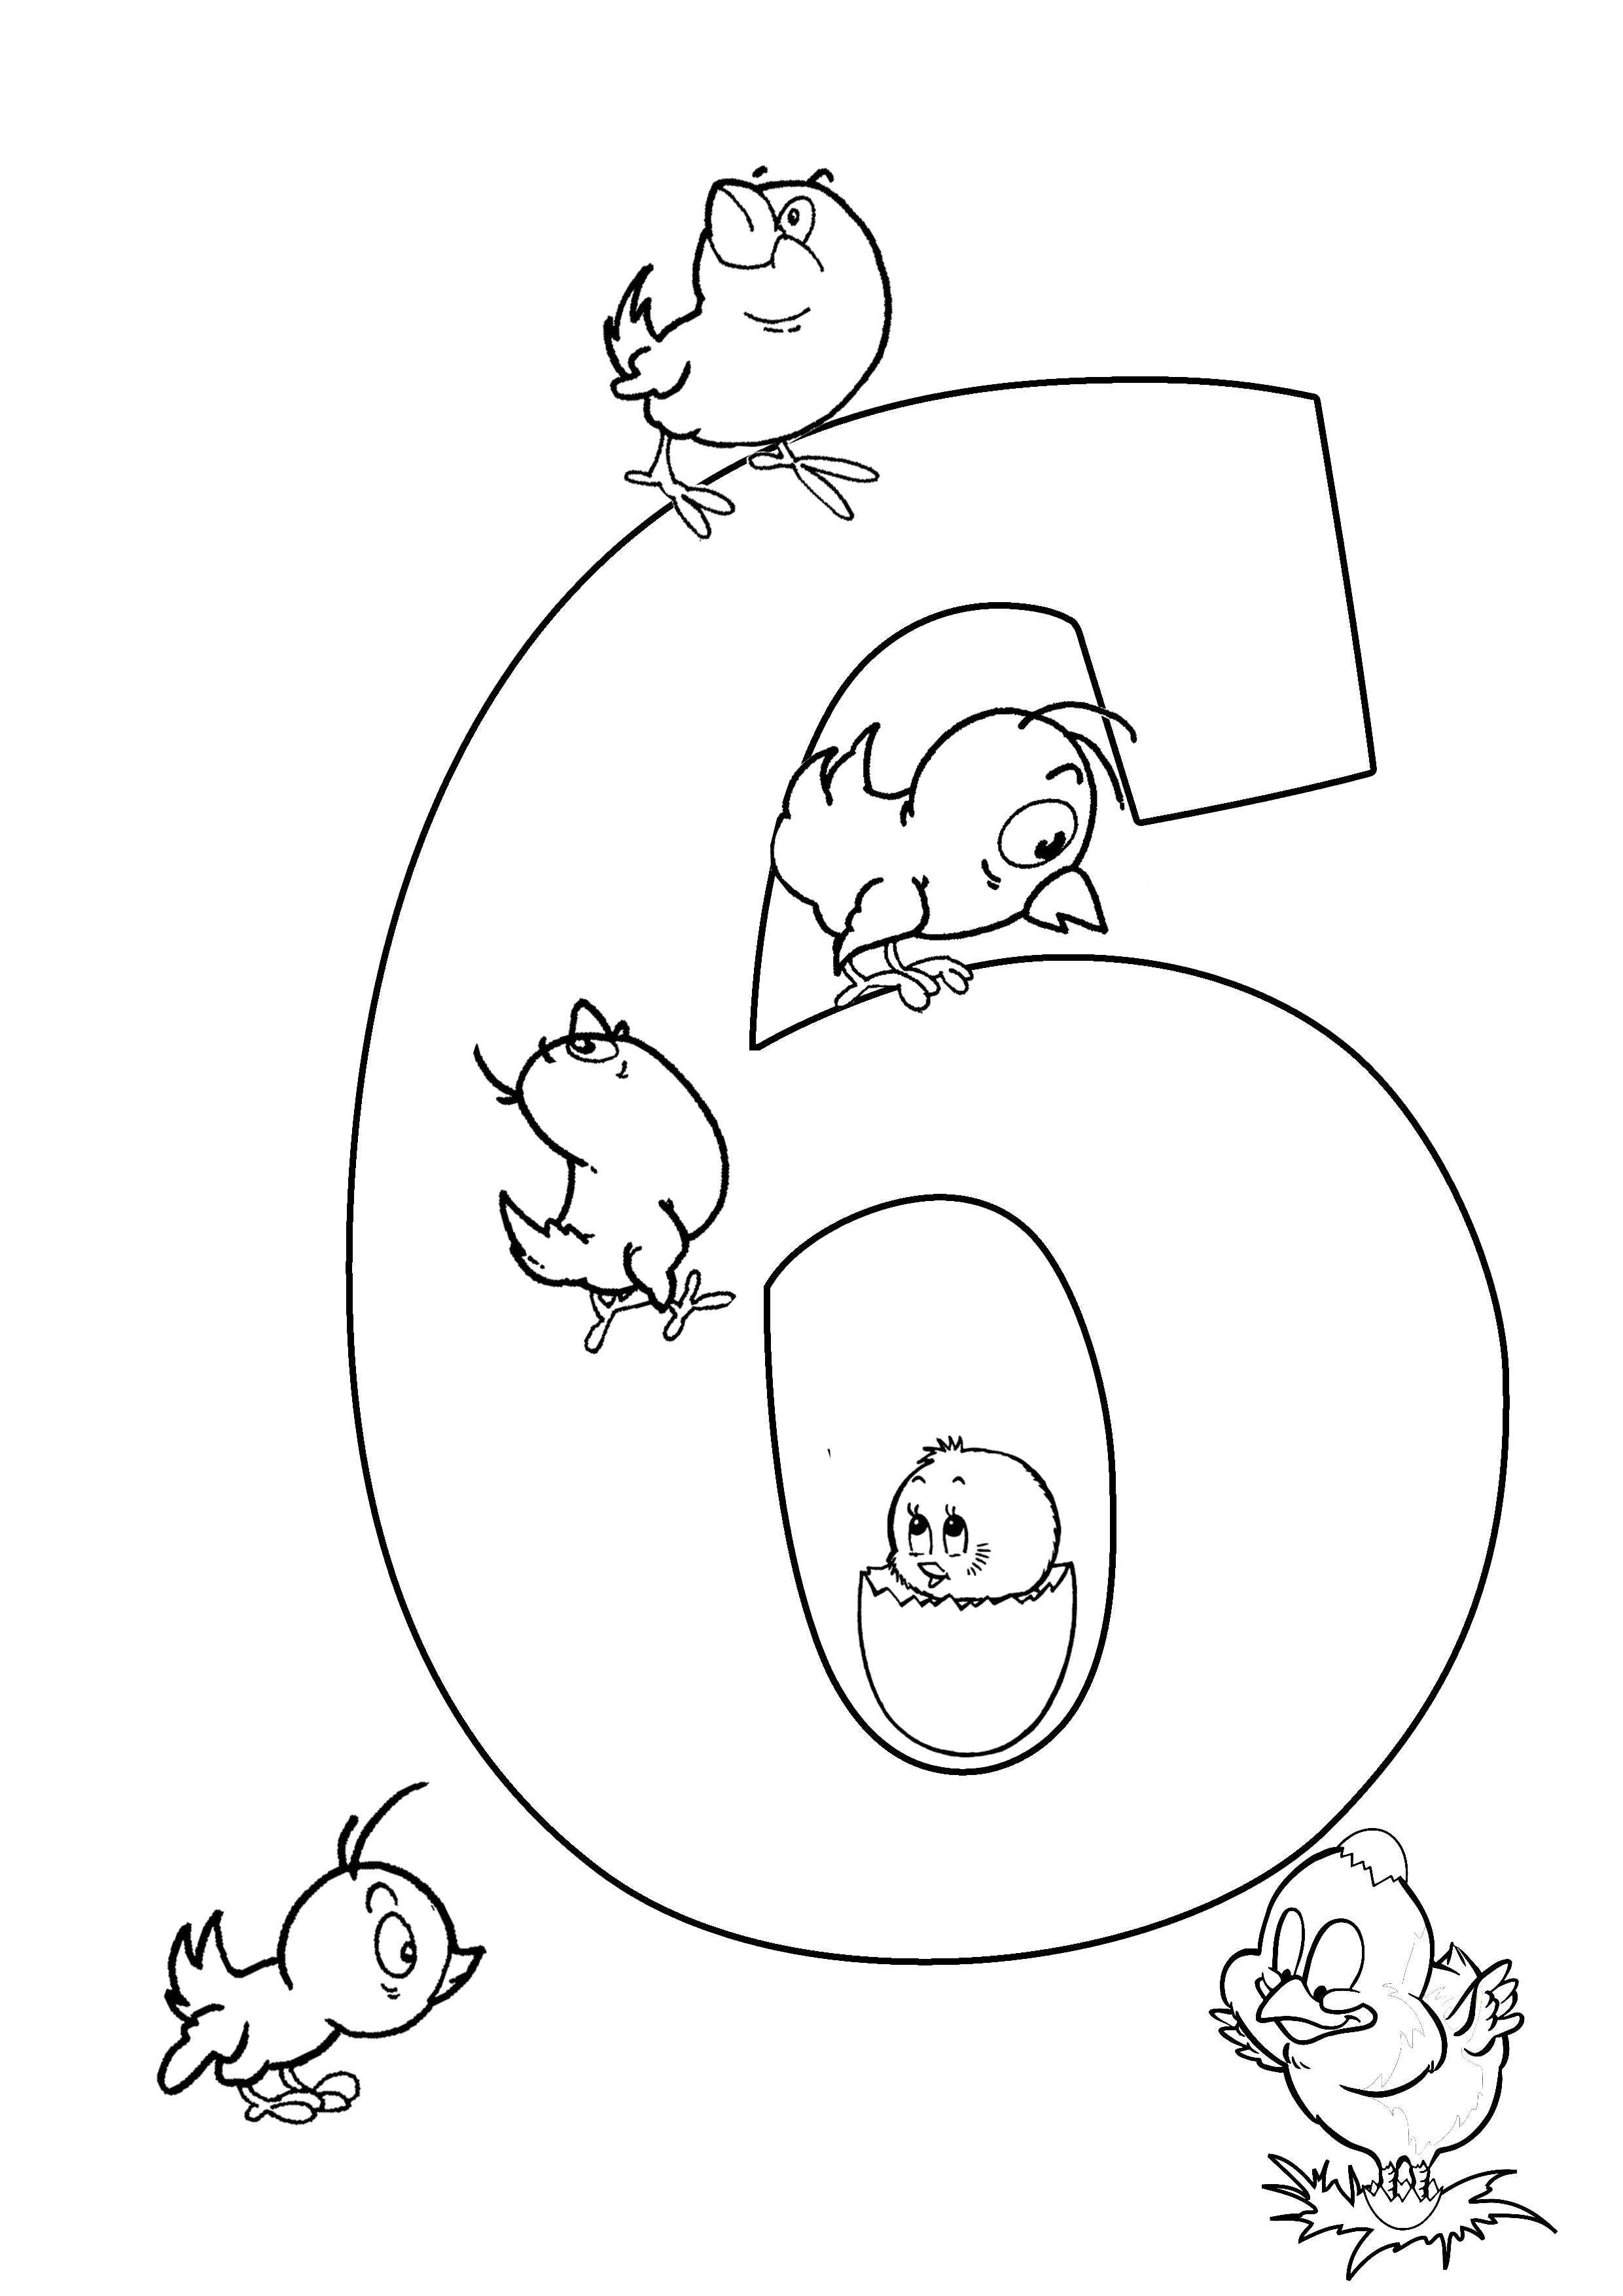 Название: Раскраска Веселый счет шесть птичек. Категория: с цифрами. Теги: с цифрами.